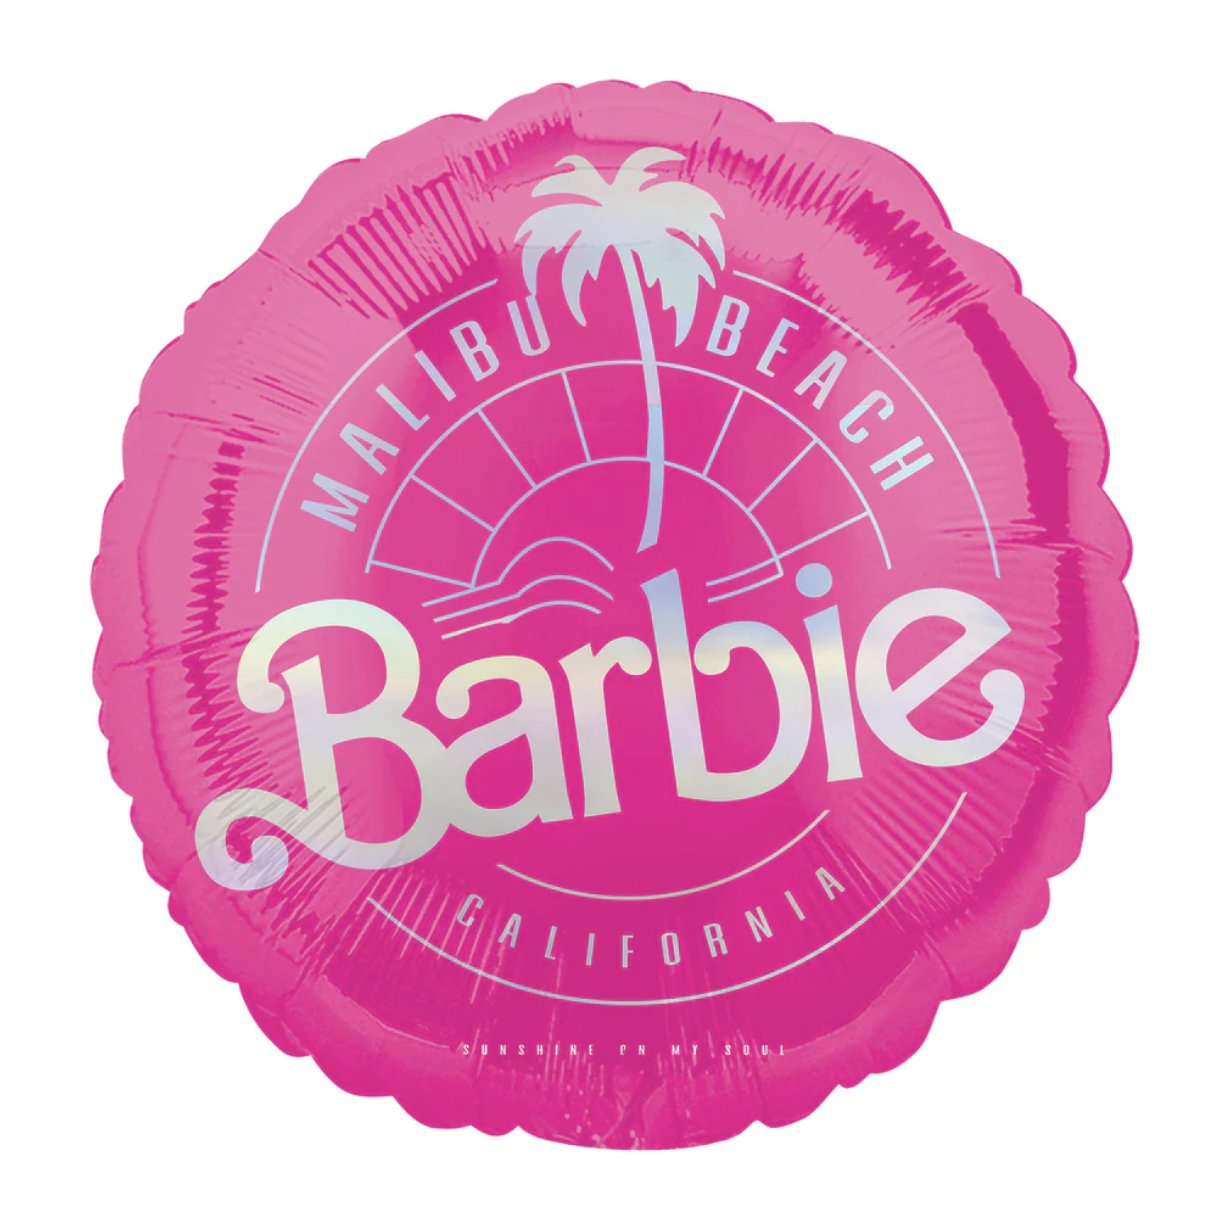 Barbie Hen Party